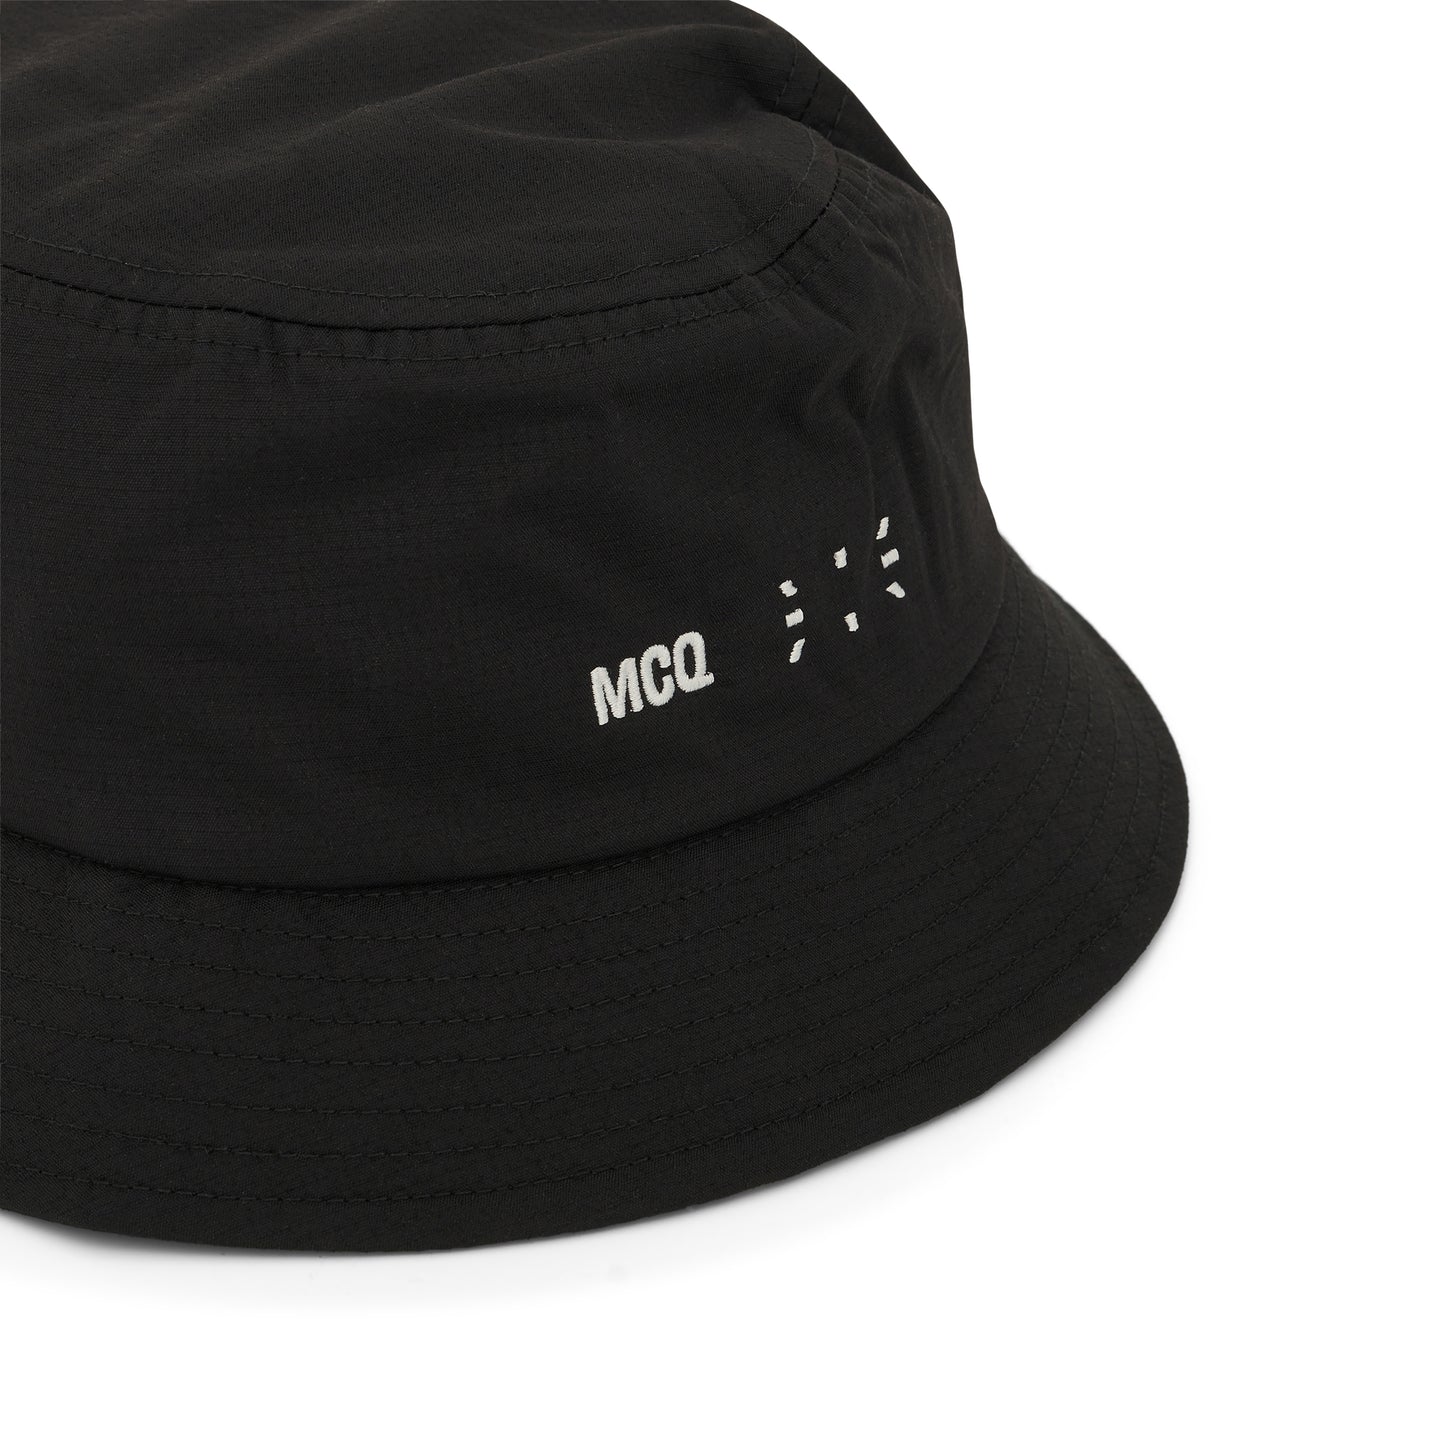 IC0 Bucket Hat in Black